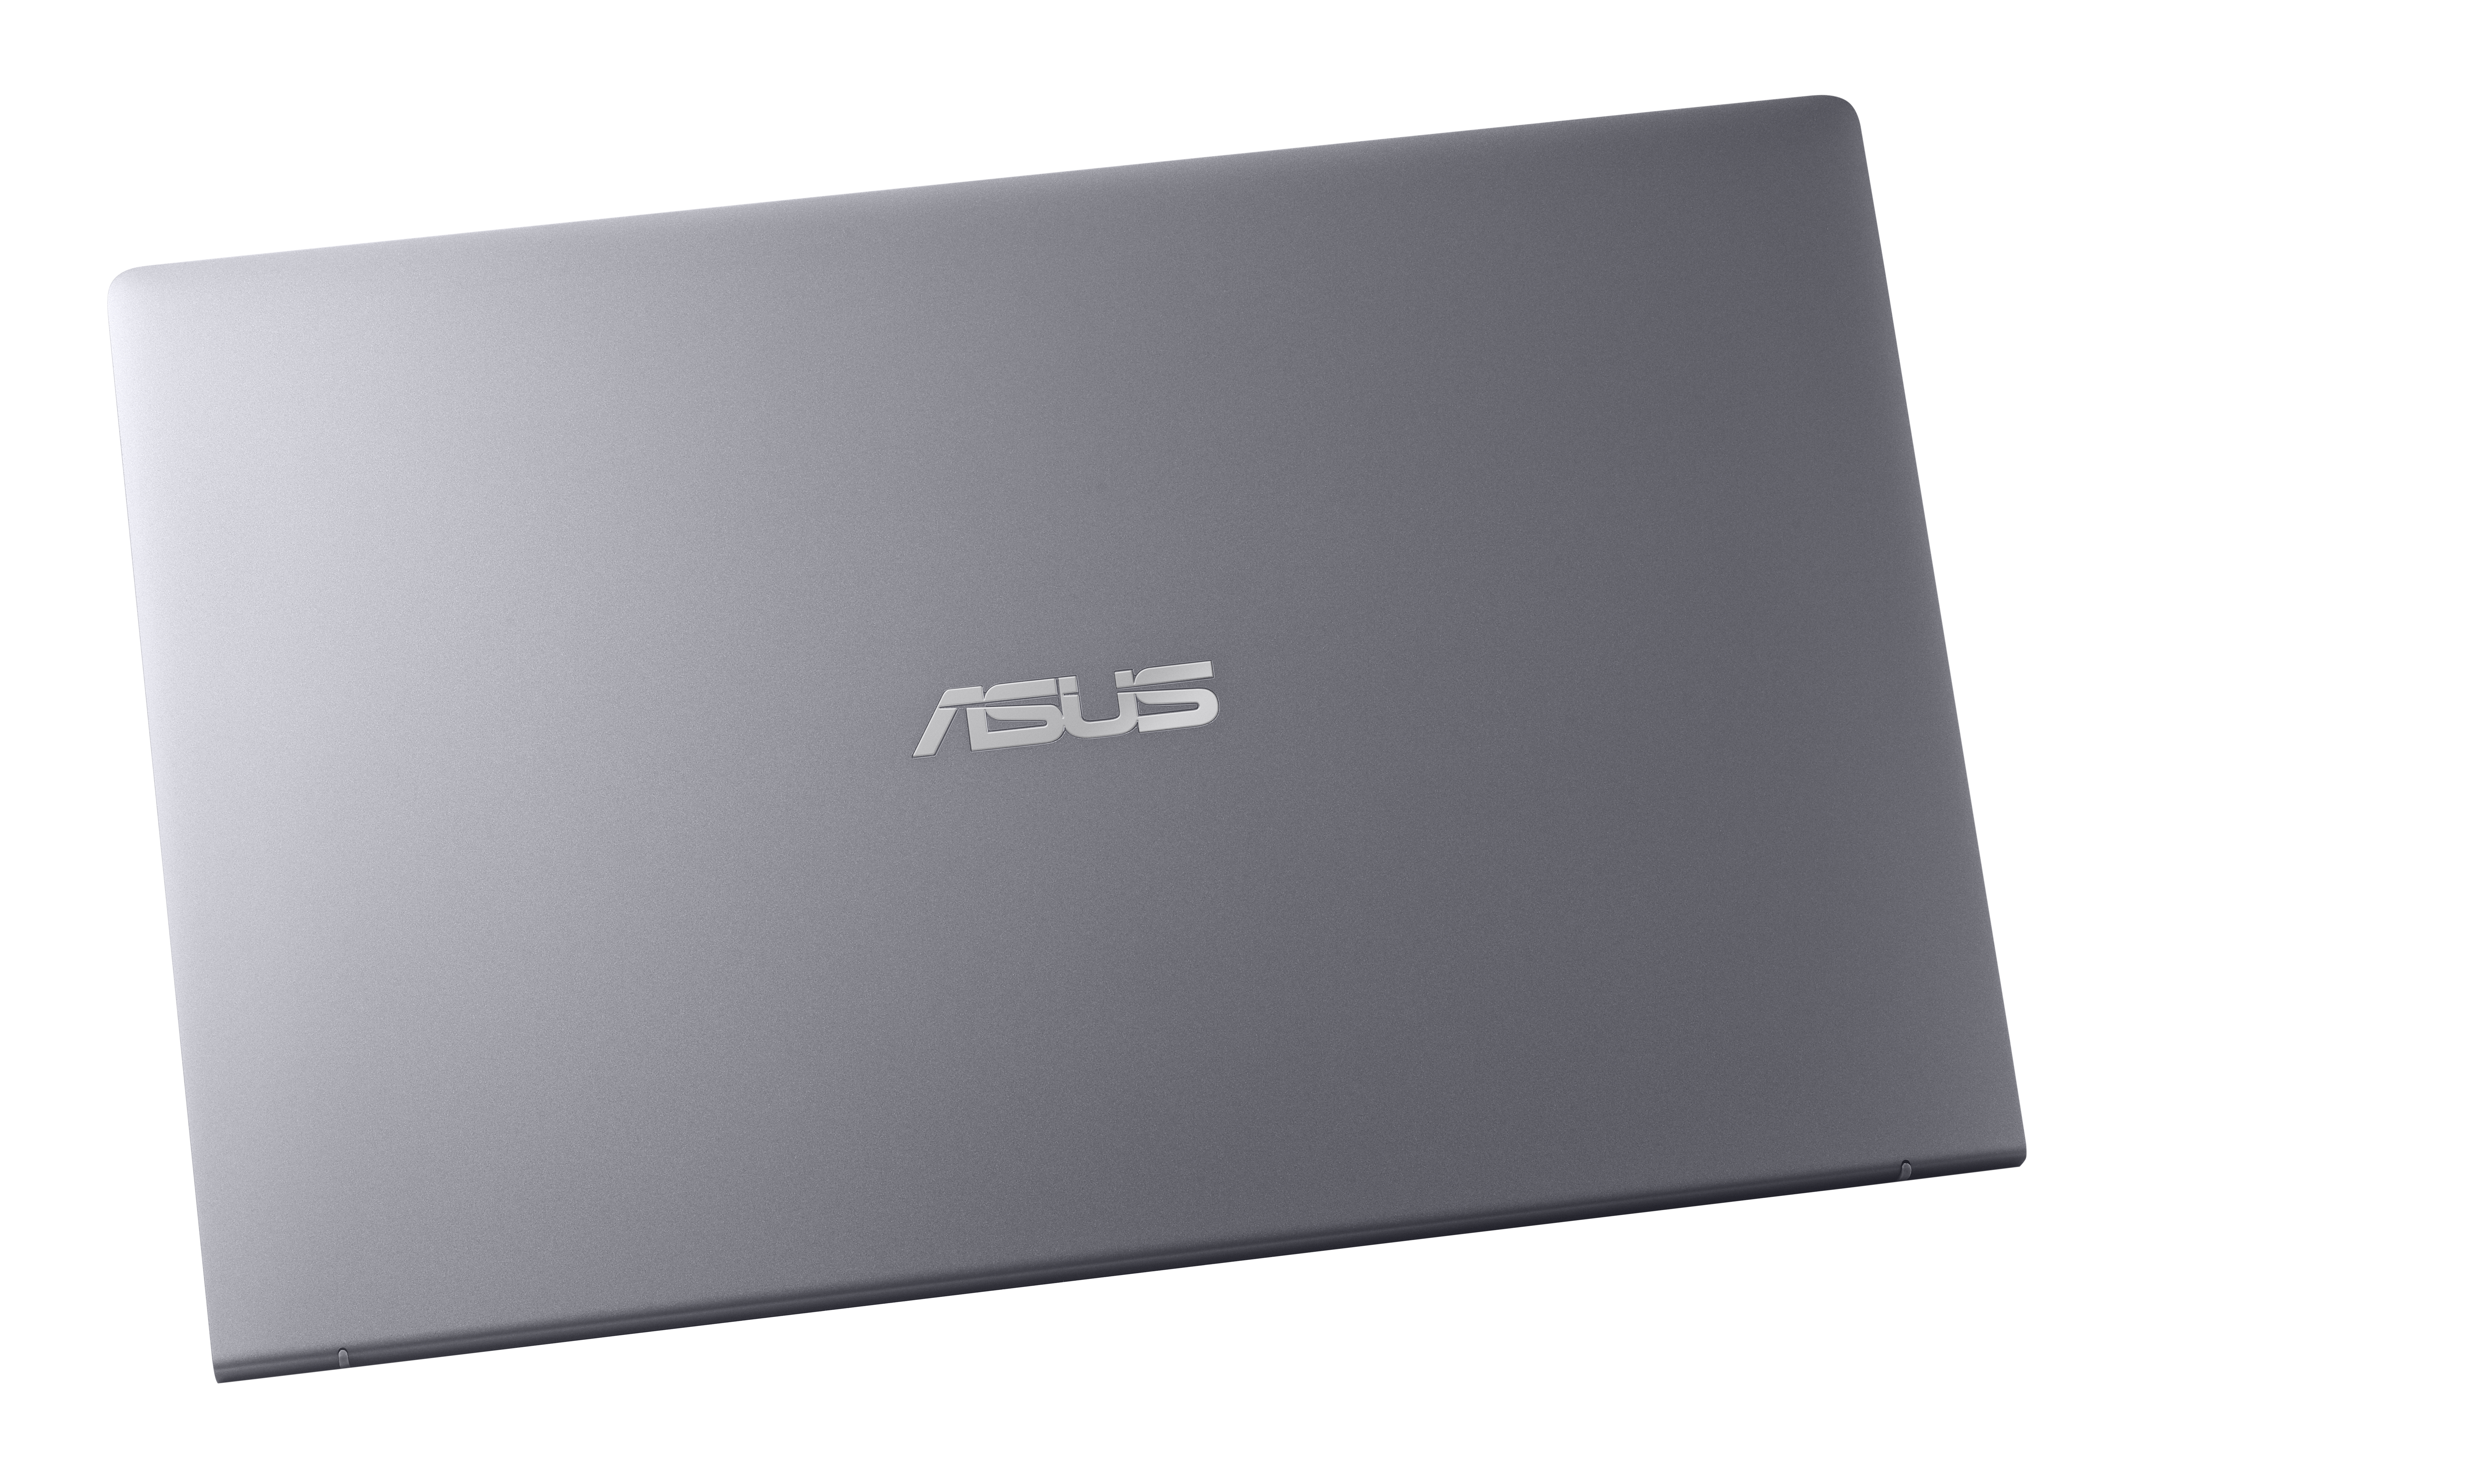 ASUS ZenBook 14 UM433IQ-A5024 - Ryzen 5 4500U 2.3 GHz - kein Betriebssystem - 8 GB RAM - 2,3 GHz - 512 GB